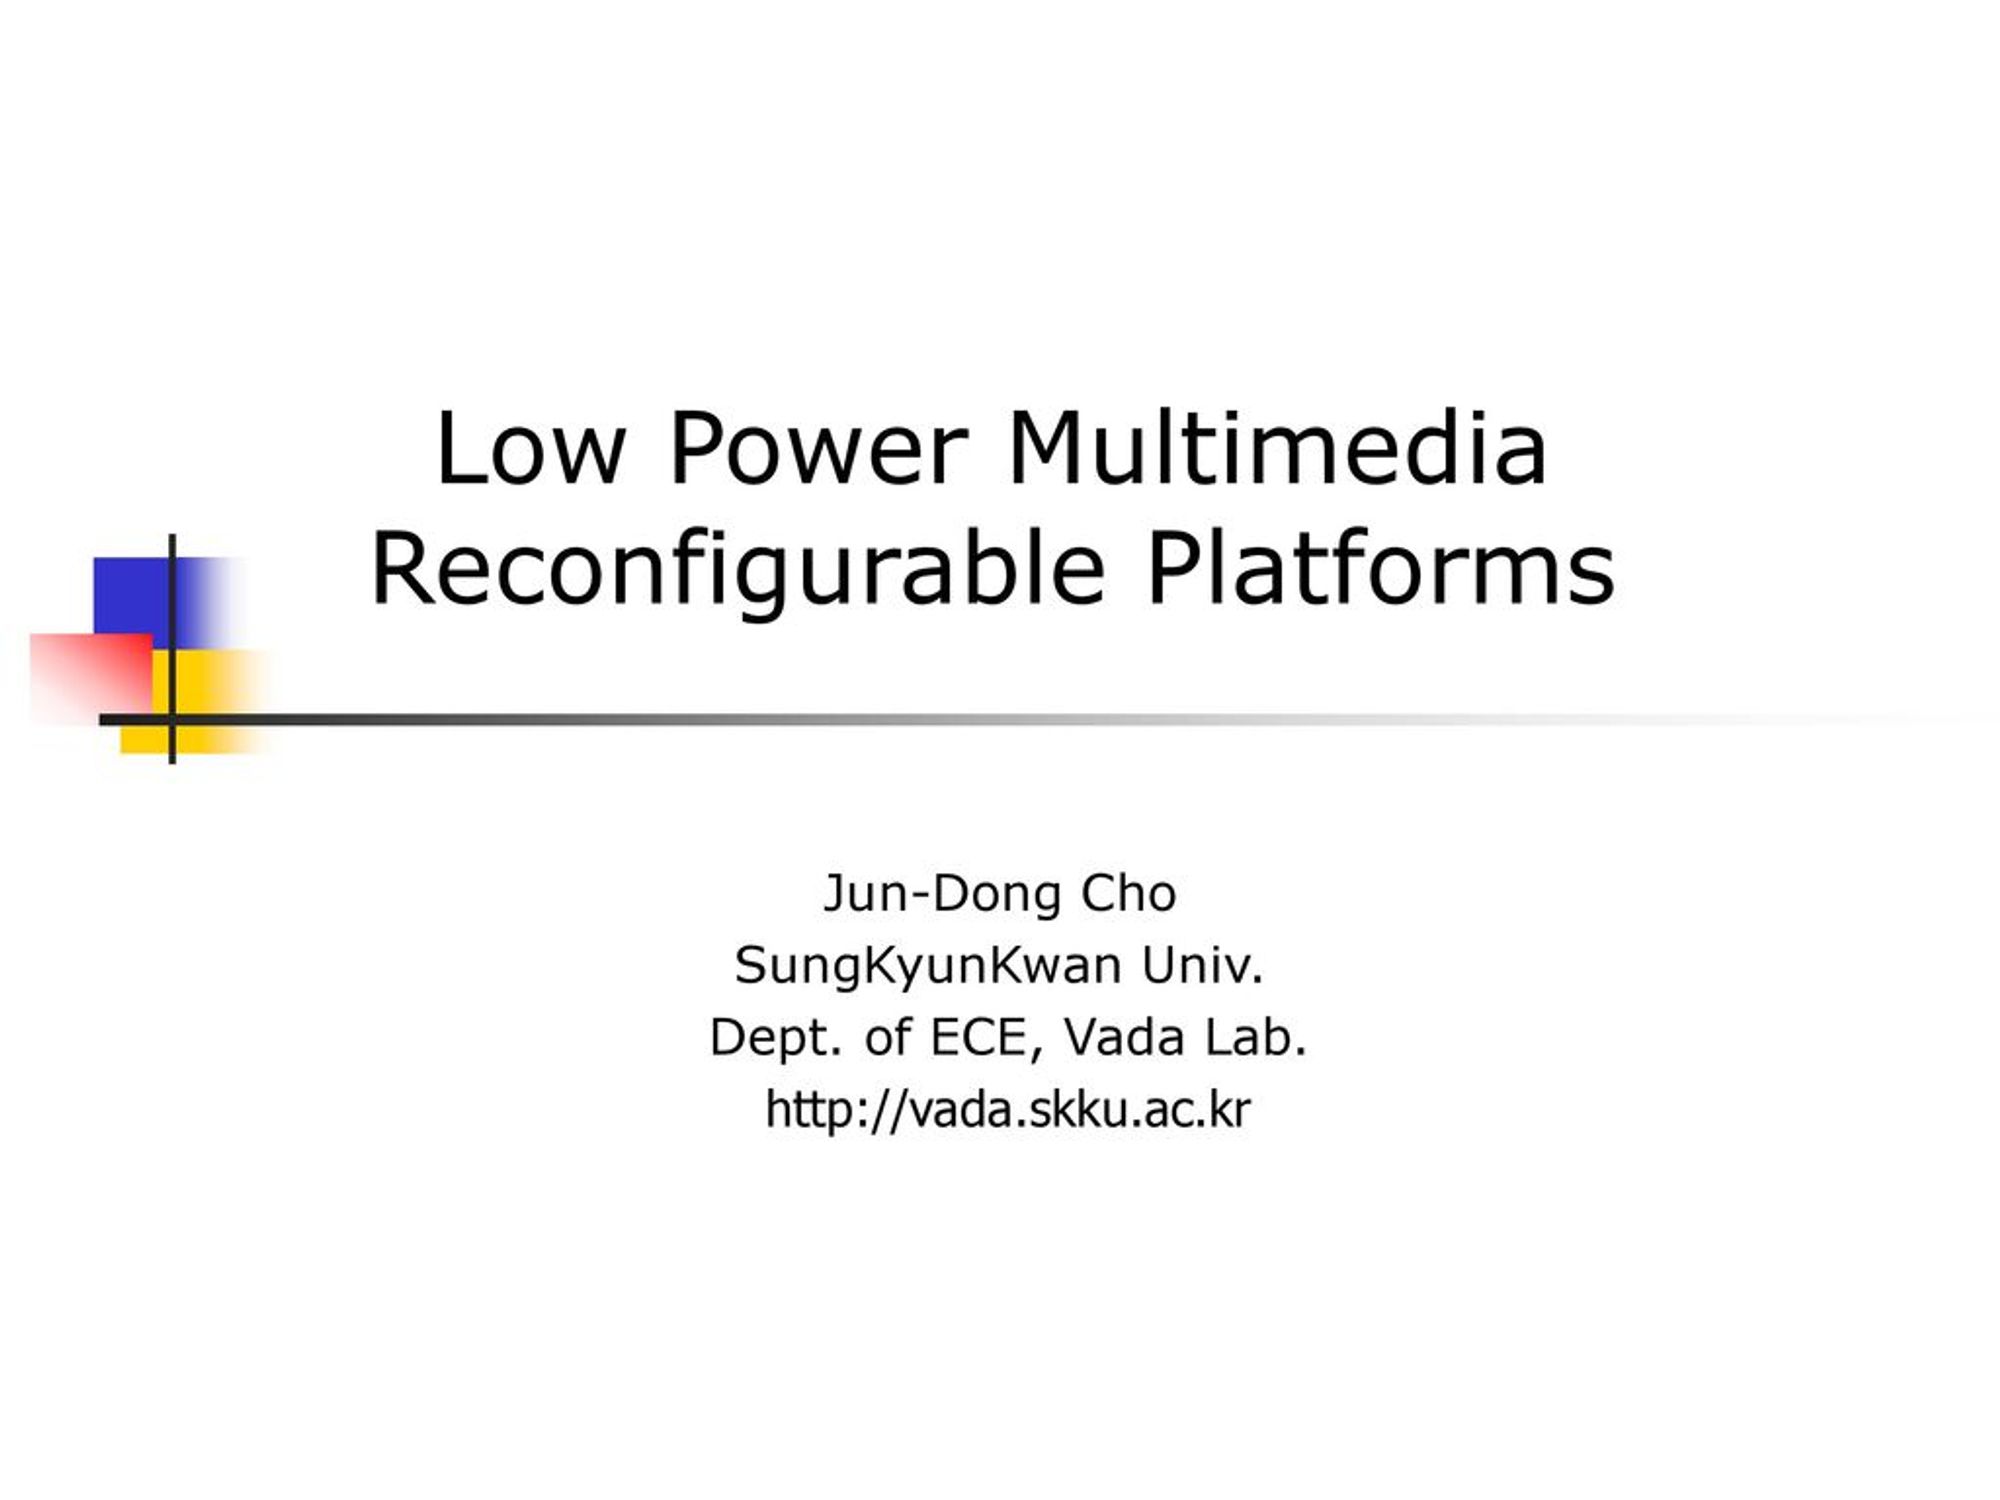 Low Power Multimedia Reconfigurable Platforms - ppt download